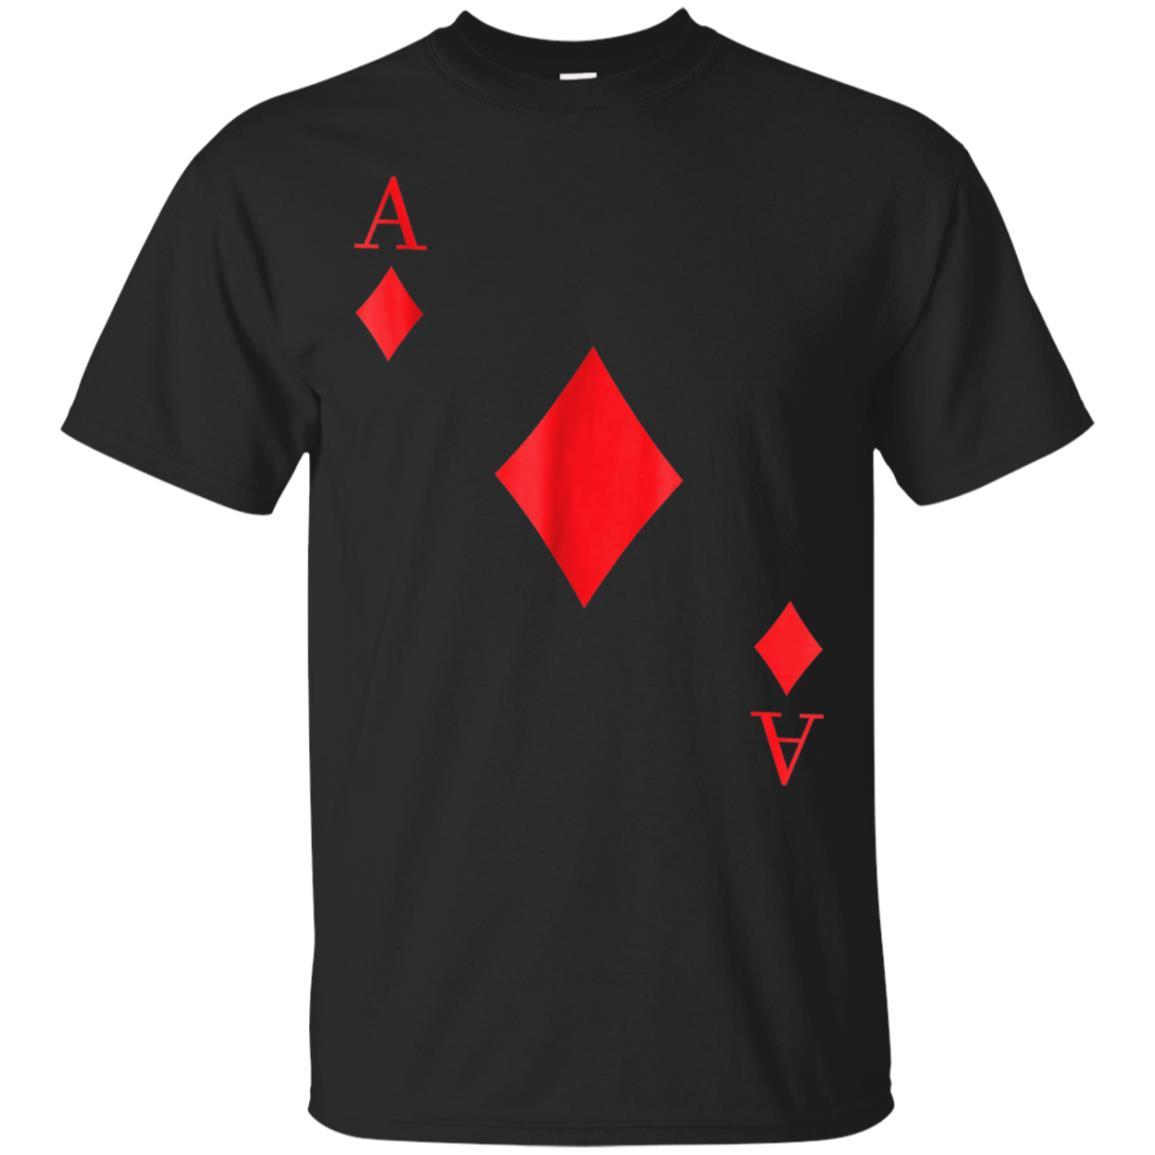 Ace Spades Playing Poker Card Costume Funny Halloween Tshirt Catsolo Fashion T-shirt